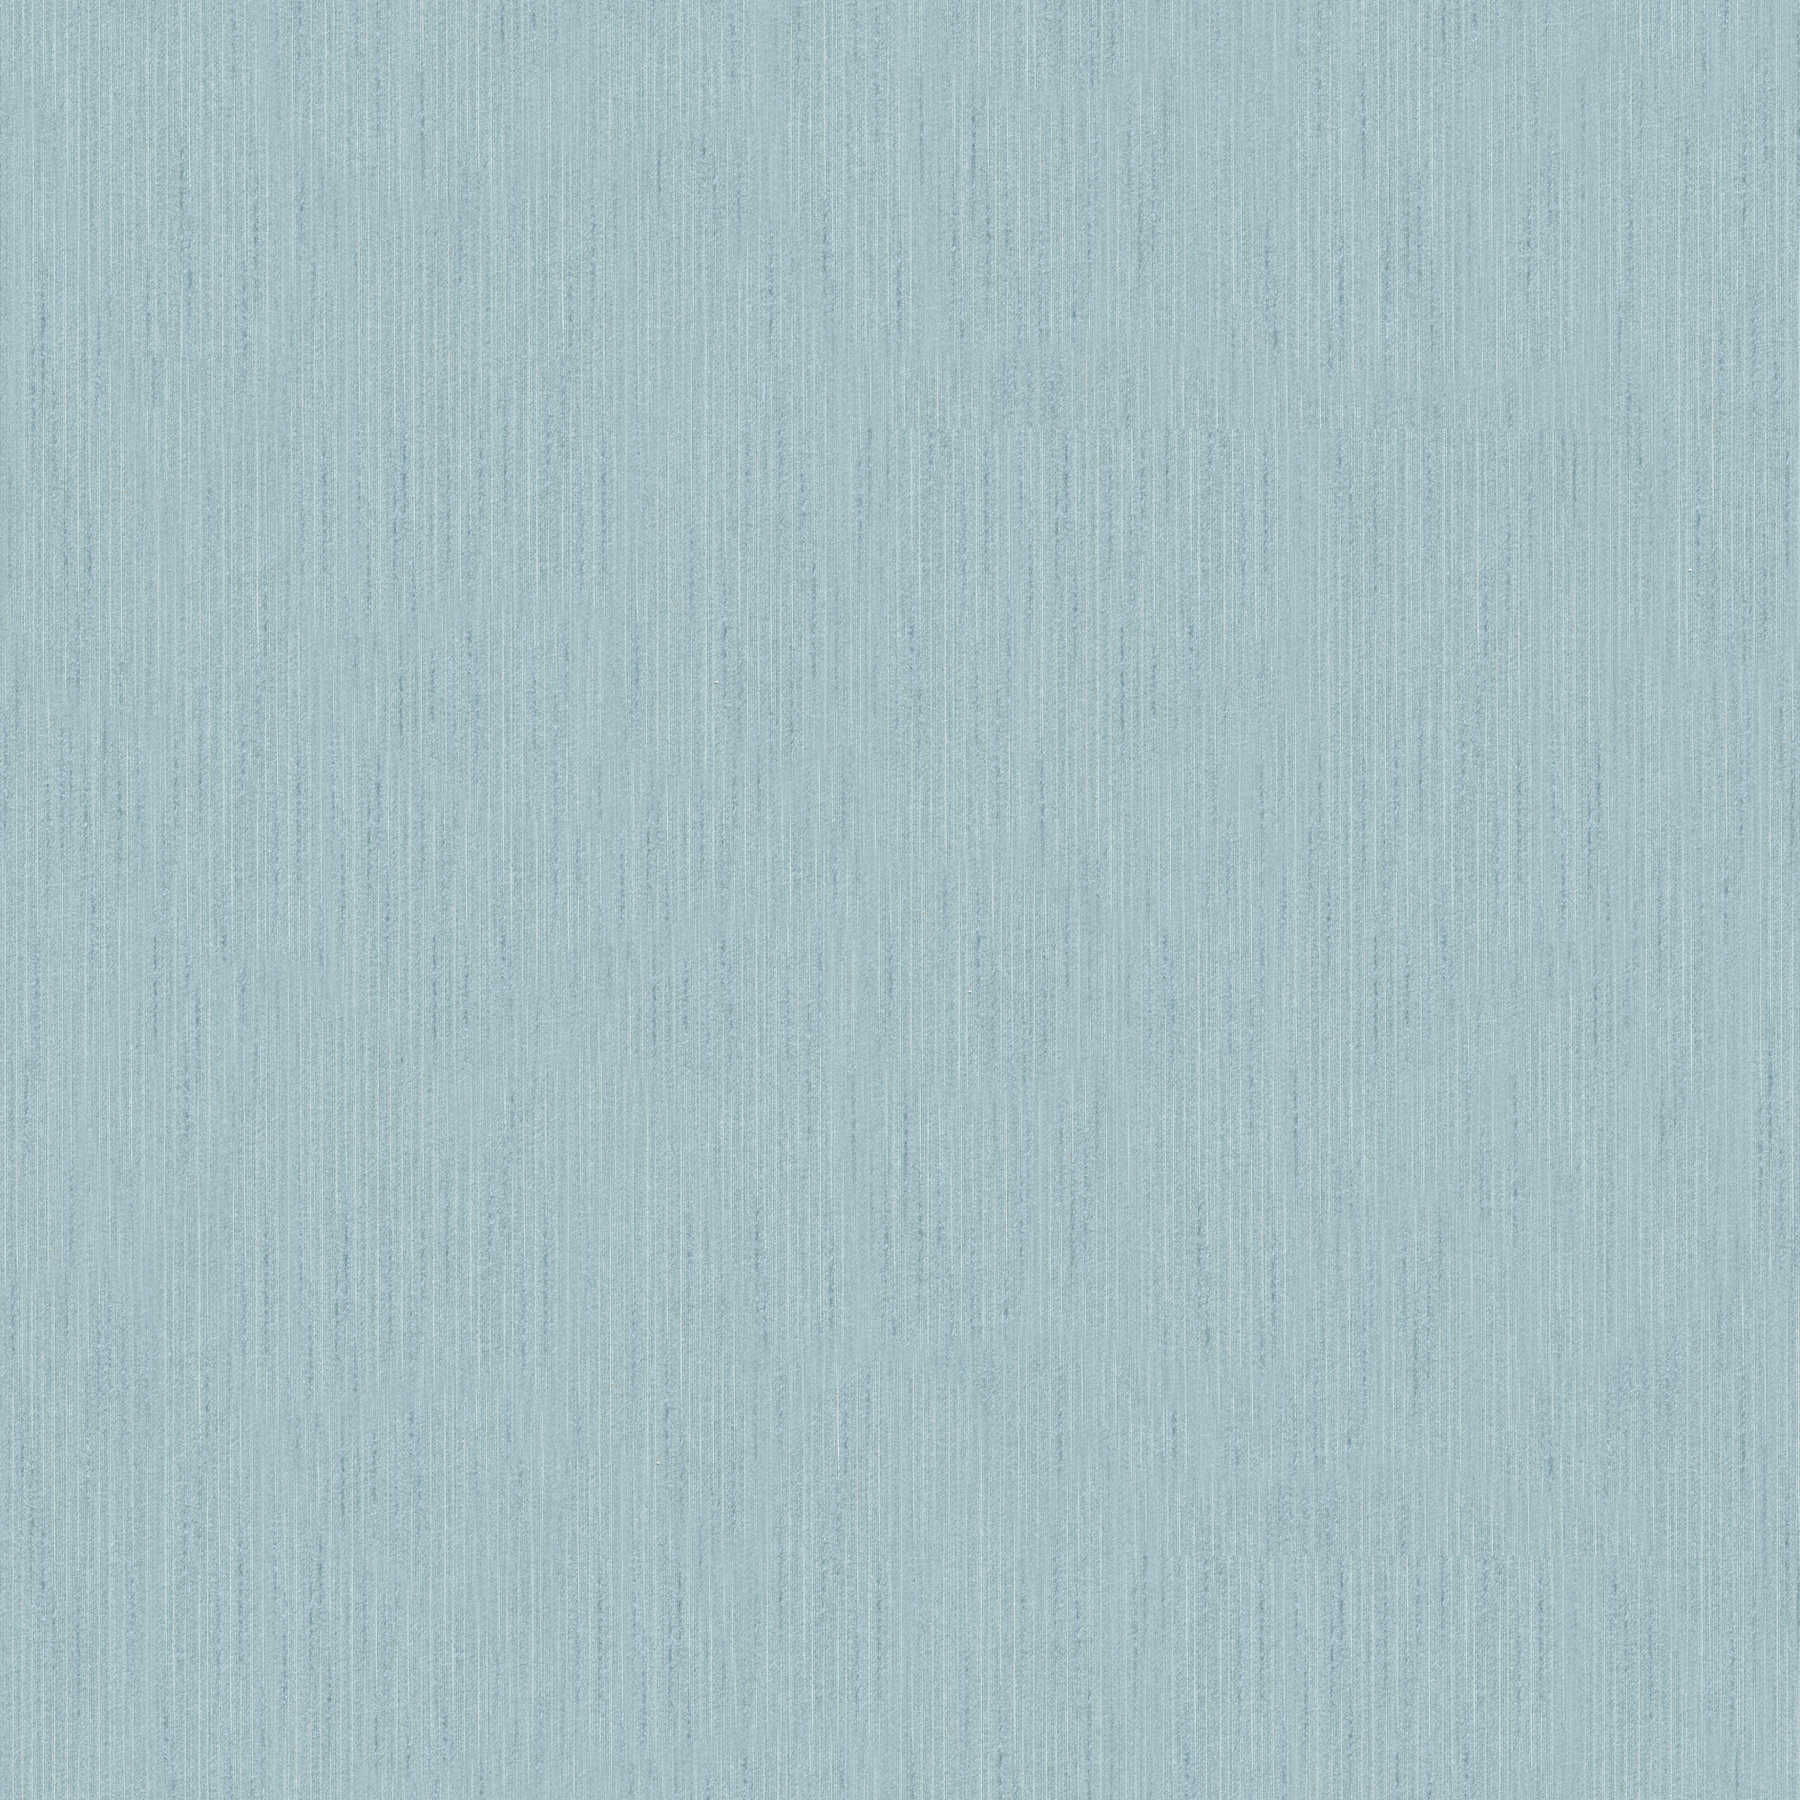 Wallpaper blue grey with texture effect & mottled colour & textile effect
